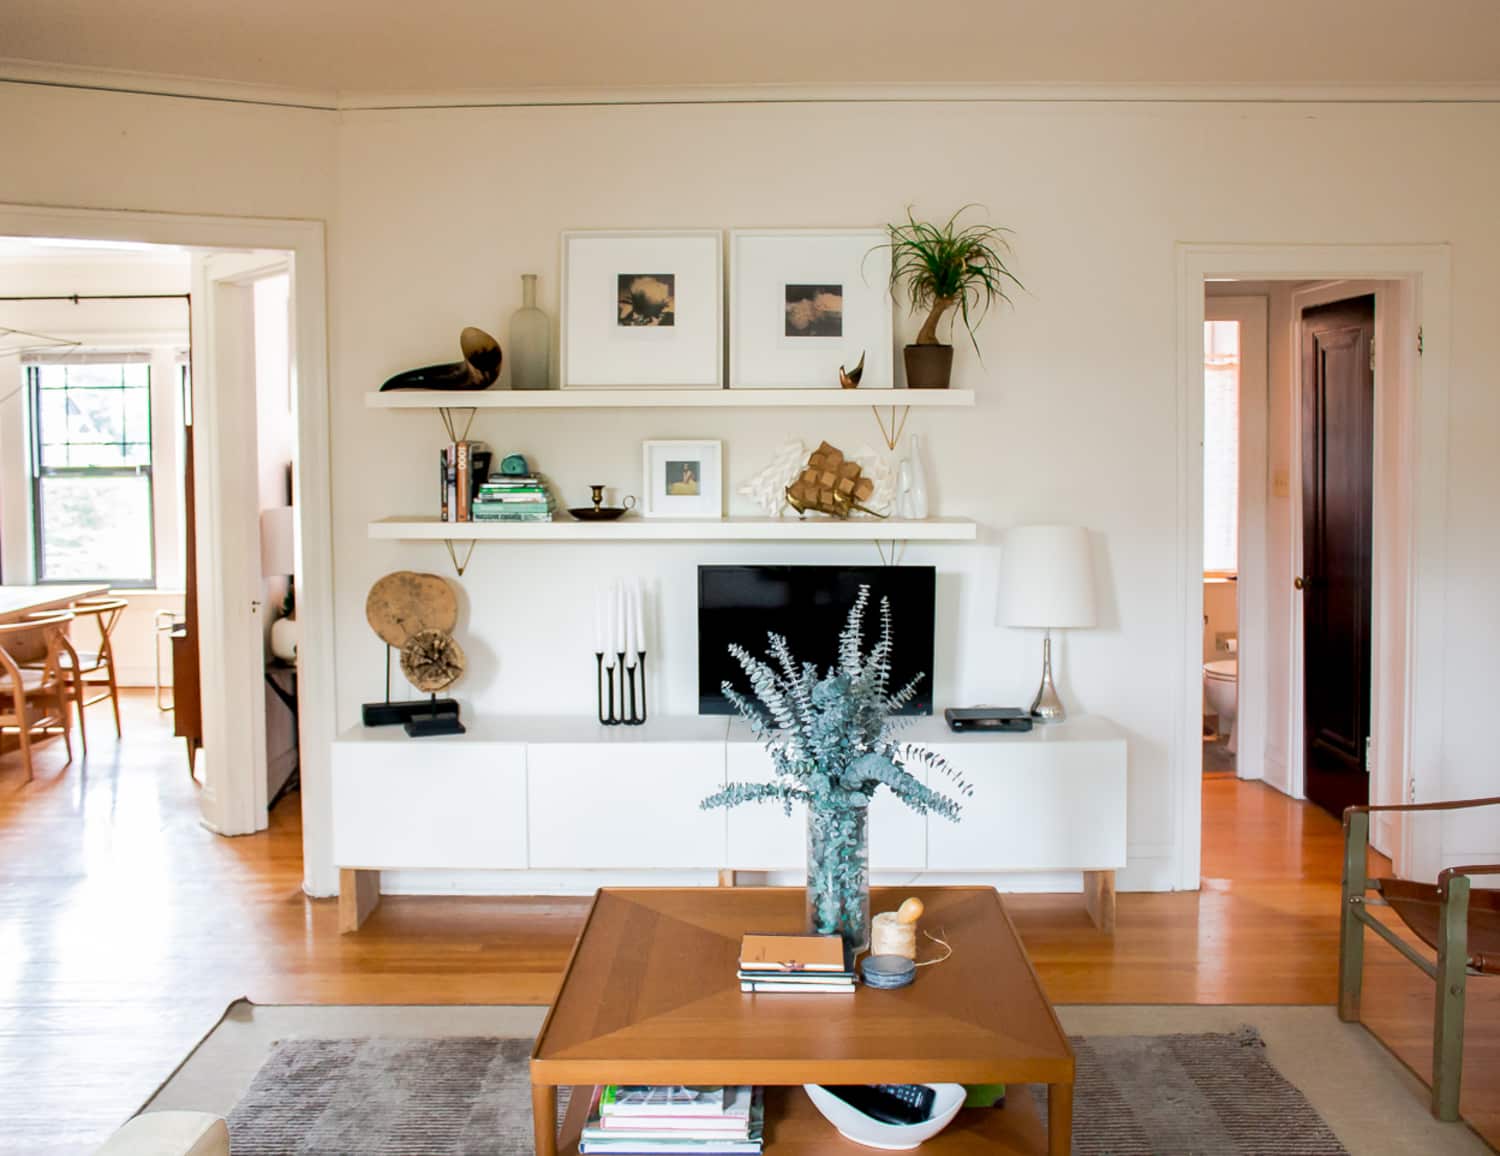 Wall Shelving - Budget Living Room Storage Under $100 ...